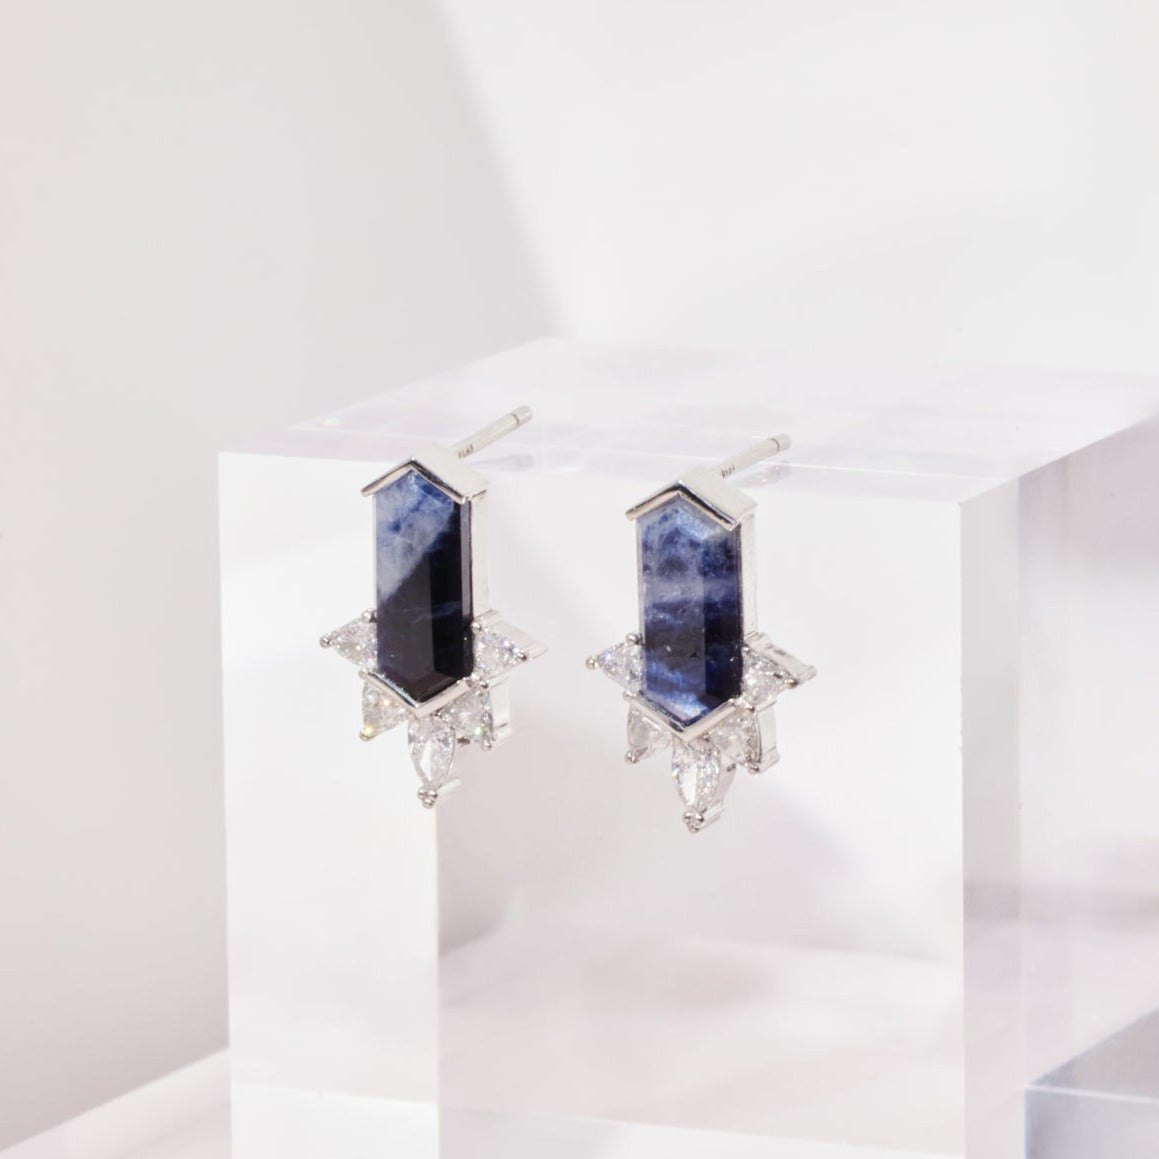 A stunning hexagonal cut Sapphire Diamond Earring placed on a white shinny surface